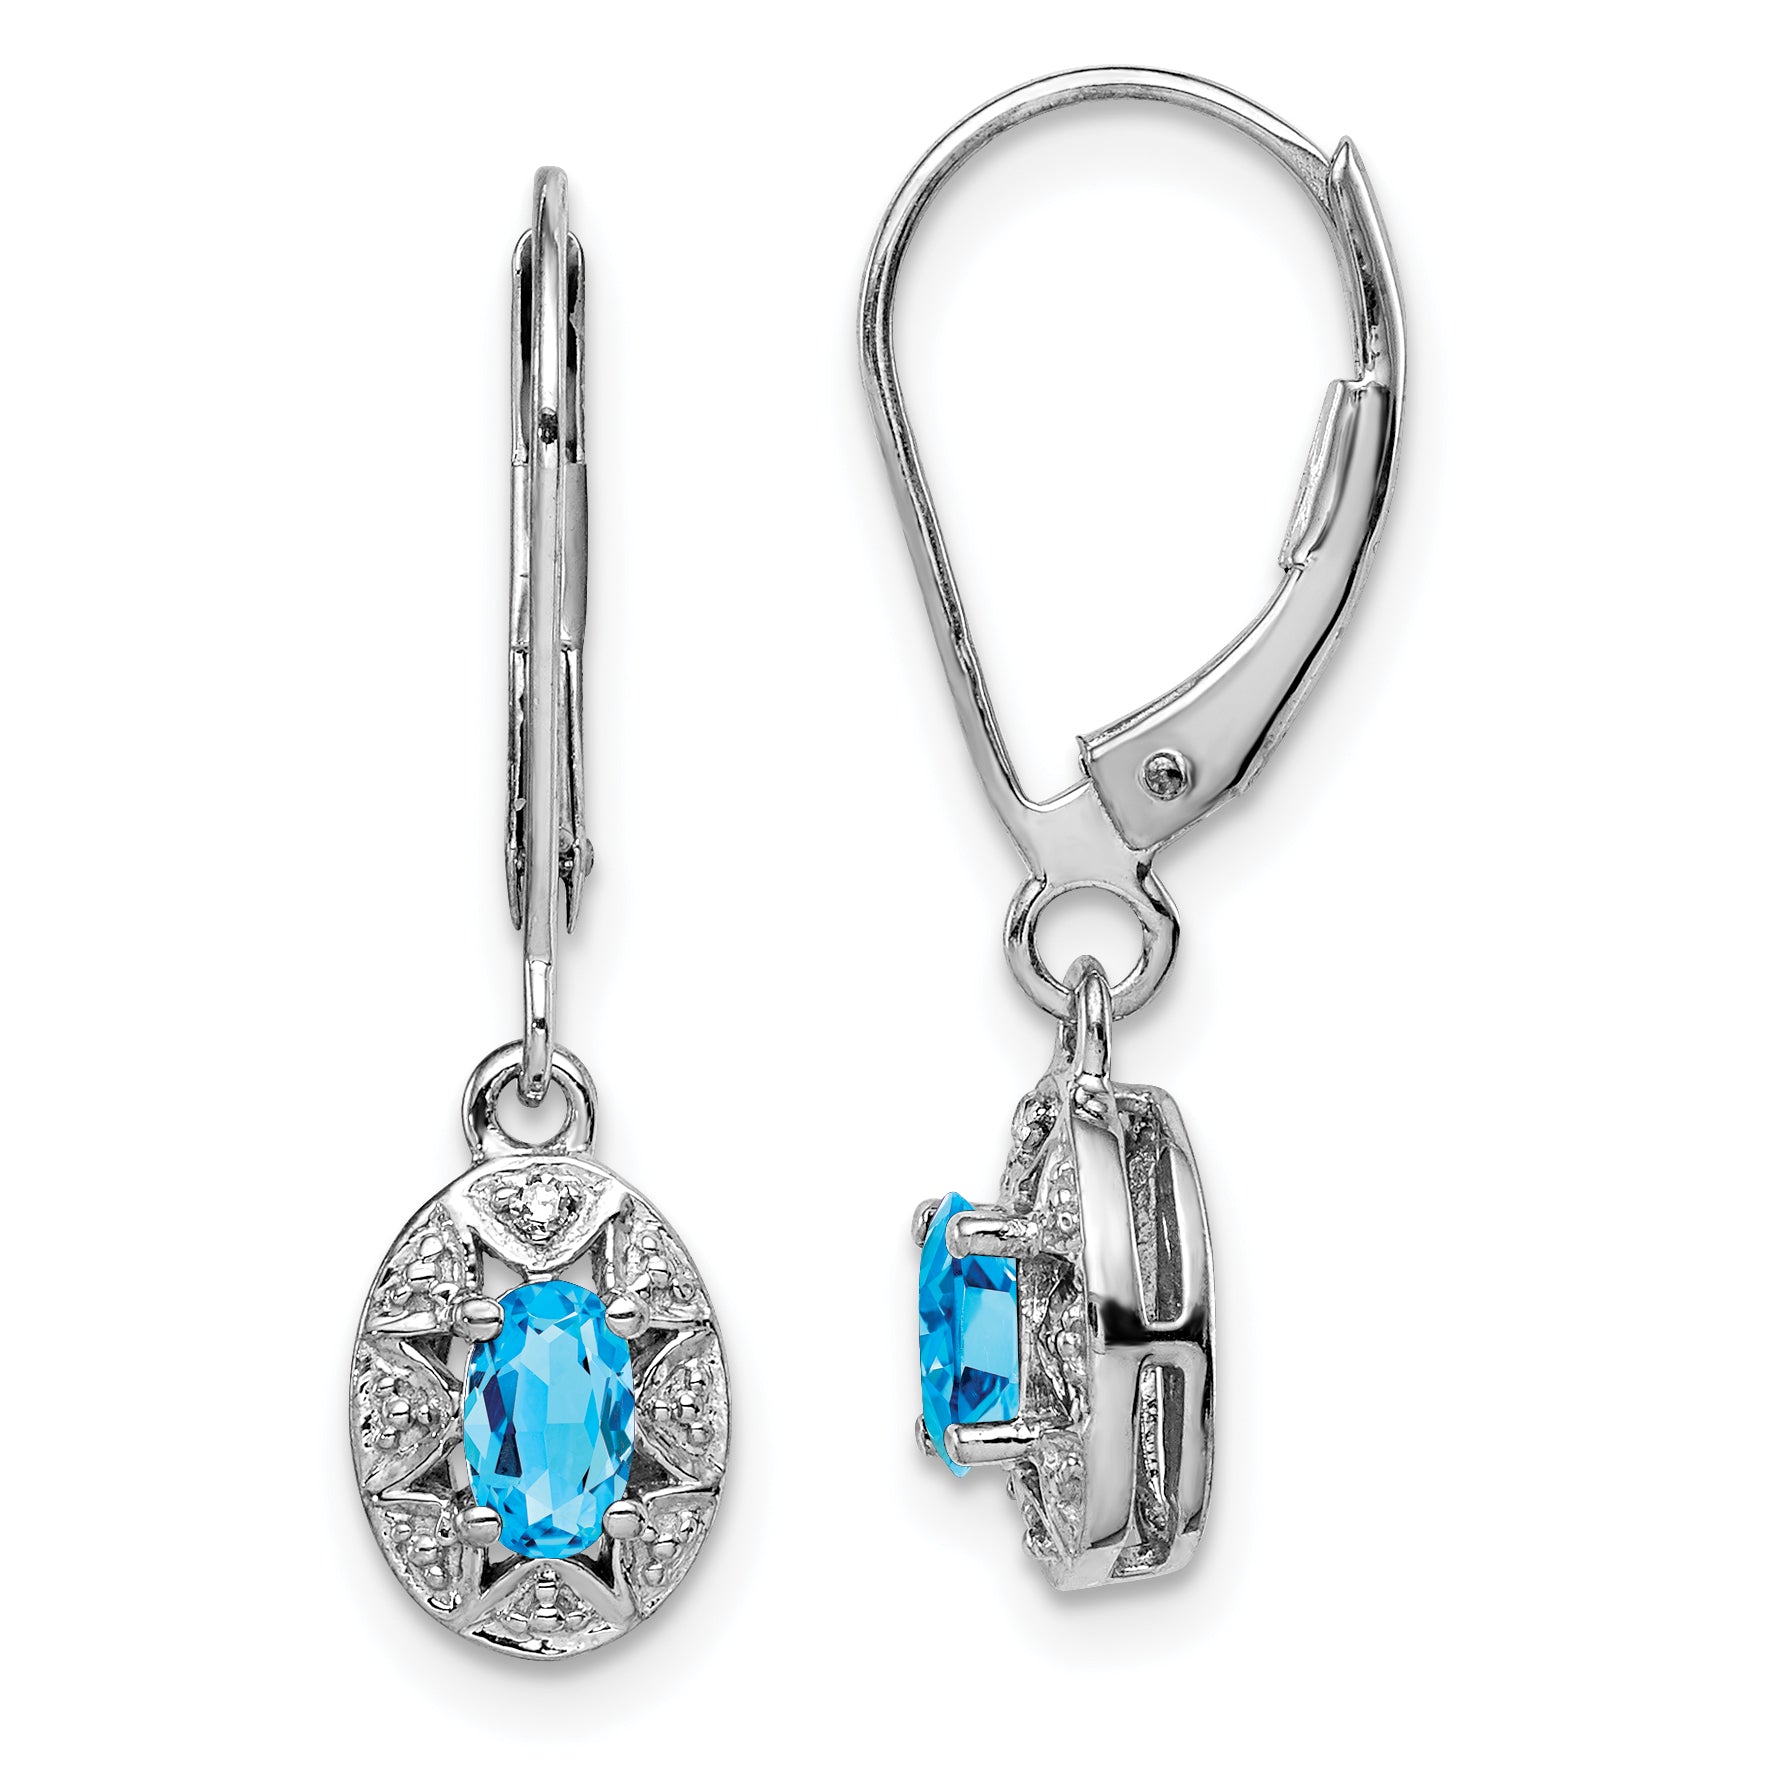 Sterling Silver Rhodium-plated Diam. & Blue Topaz Earrings